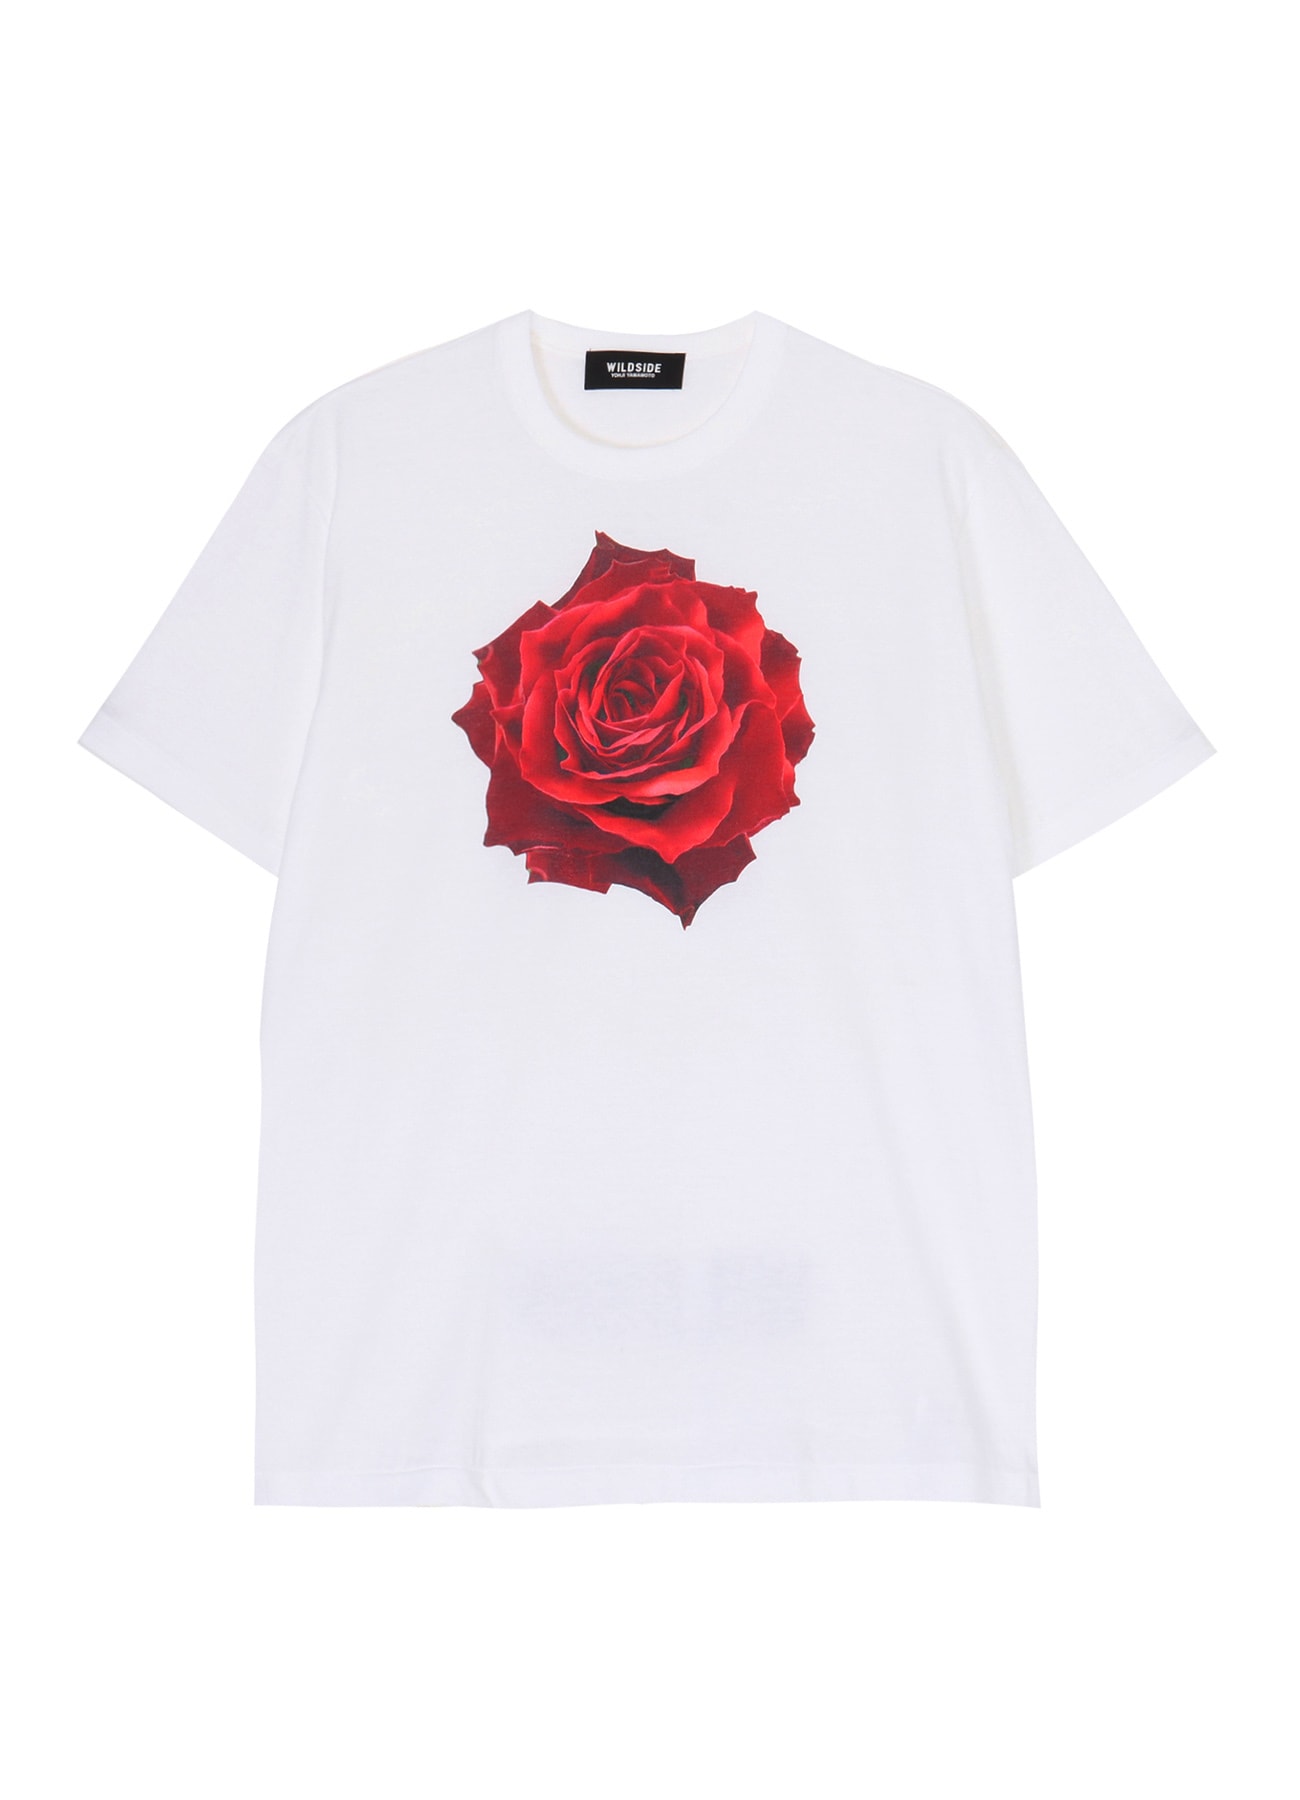 RED ROSE White T-Shirt